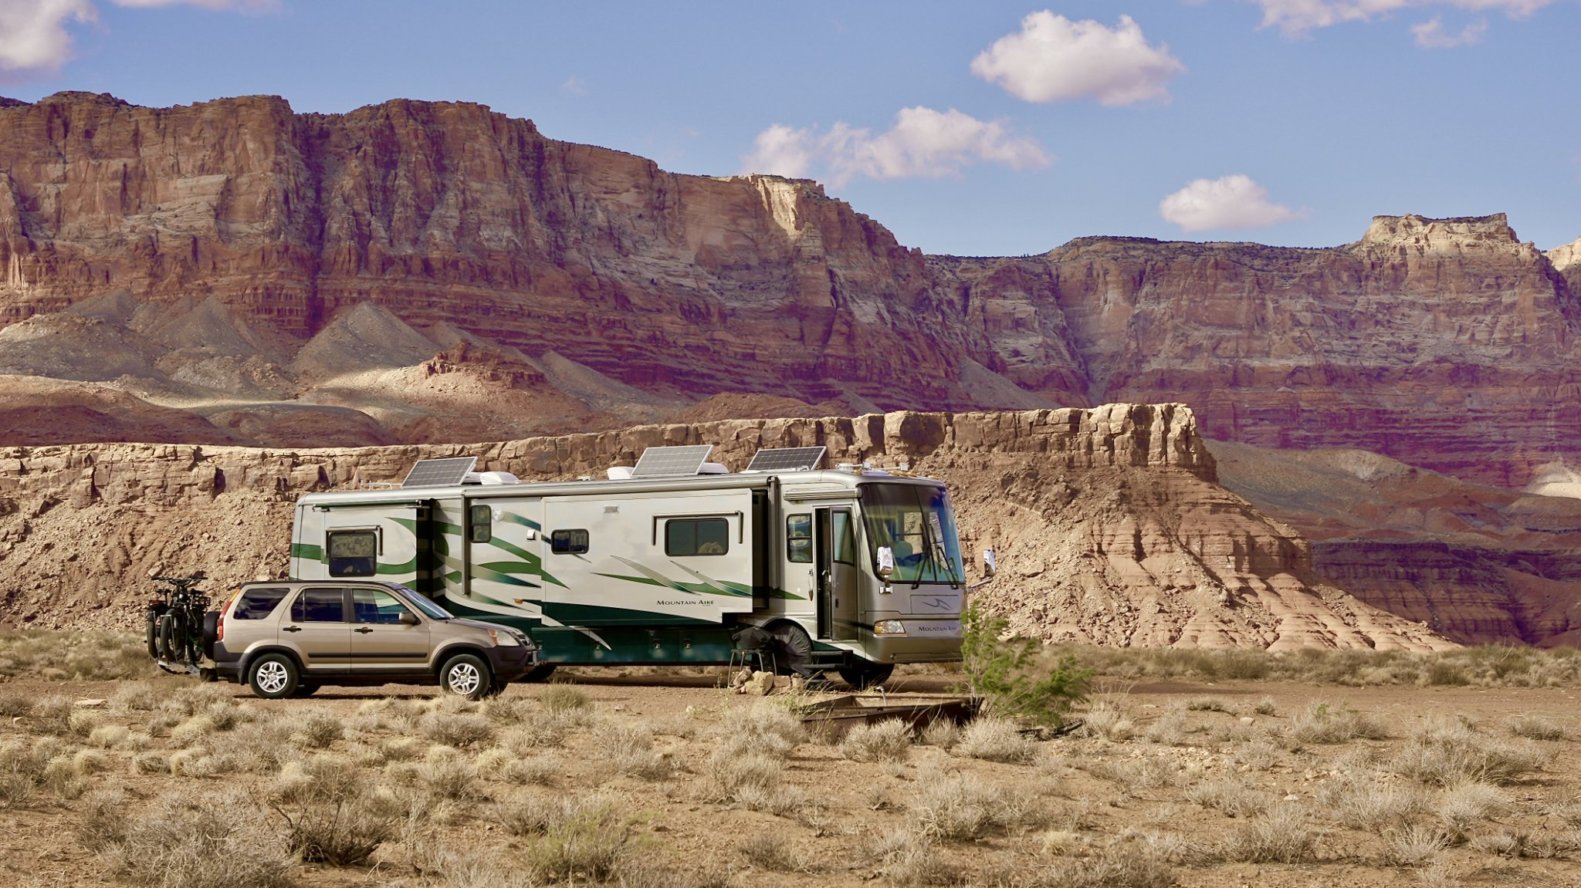 RVgeeks big rig RV at a remote desert campsite